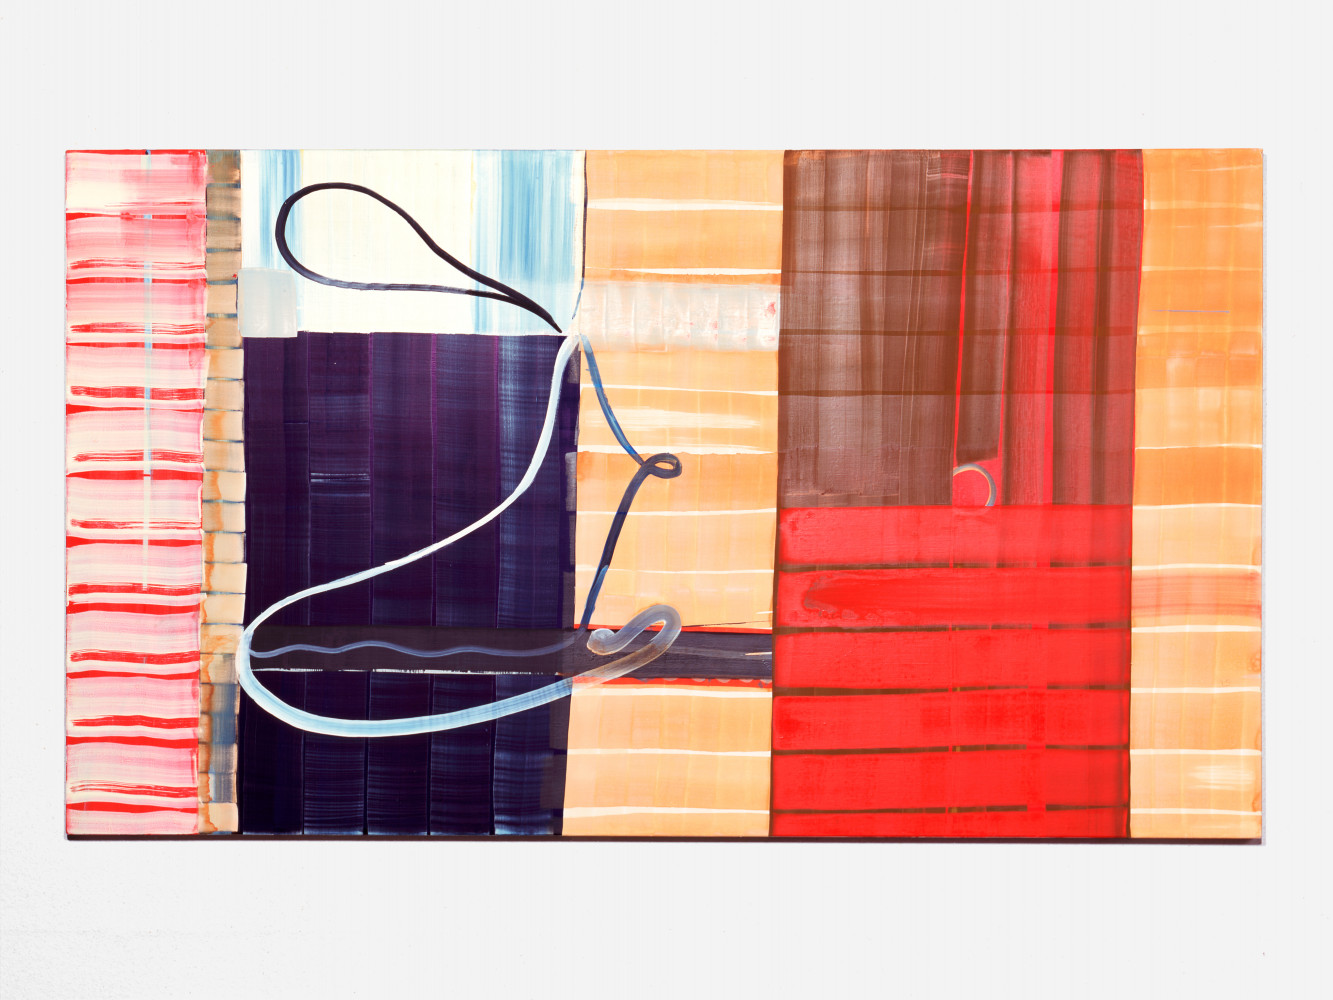 ‘Juan Uslé’, Balanza Mora, 1995, Mixed media on canvas